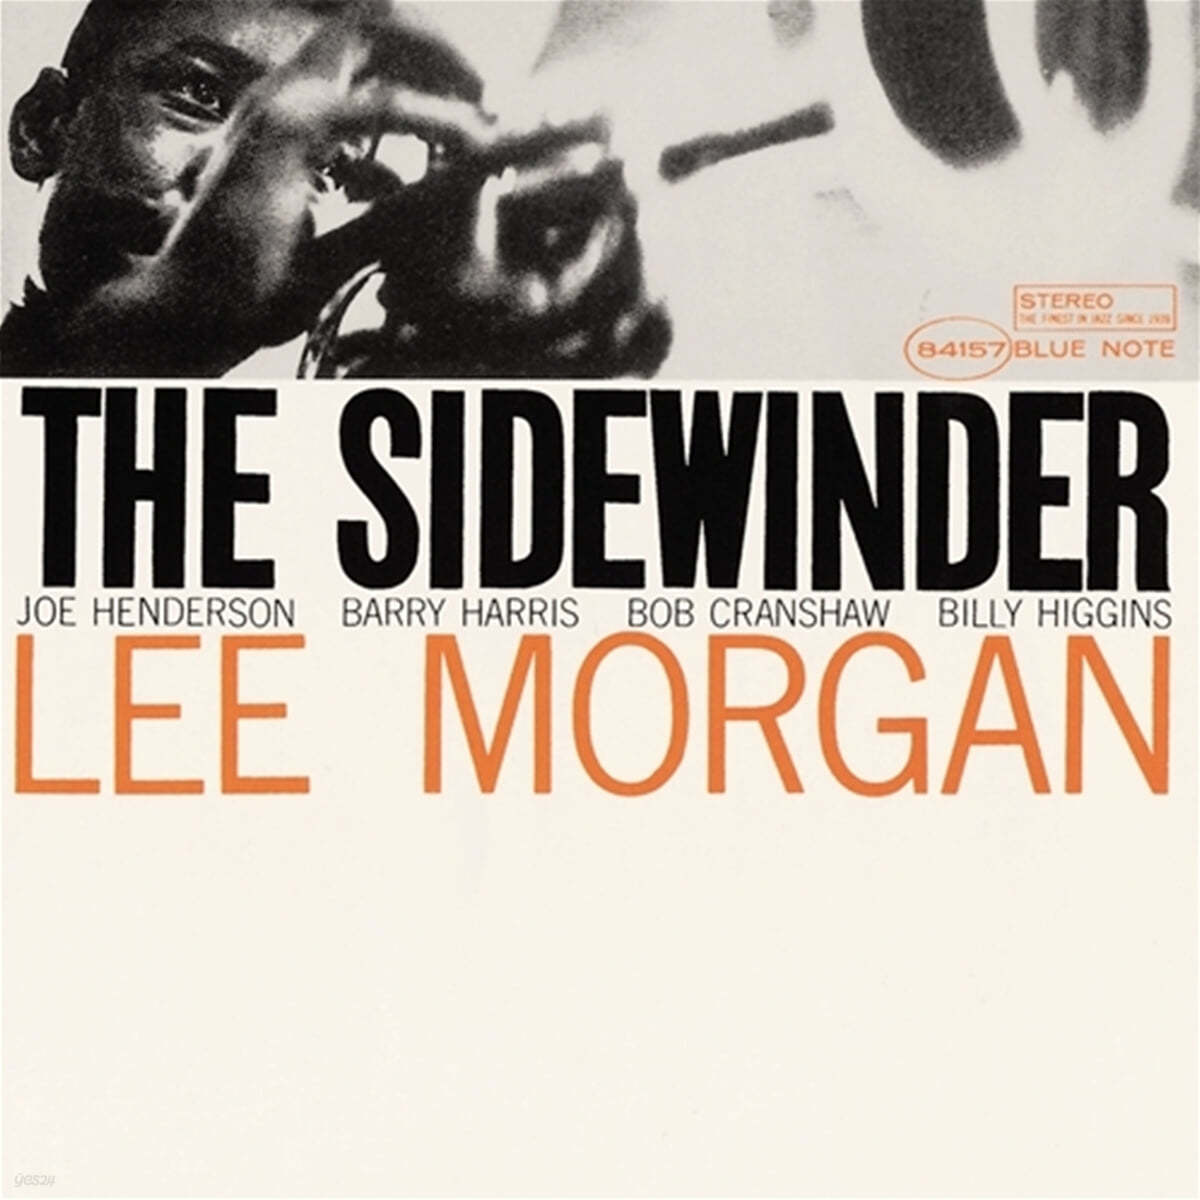 Lee Morgan (리 모건) - The Sidewinder